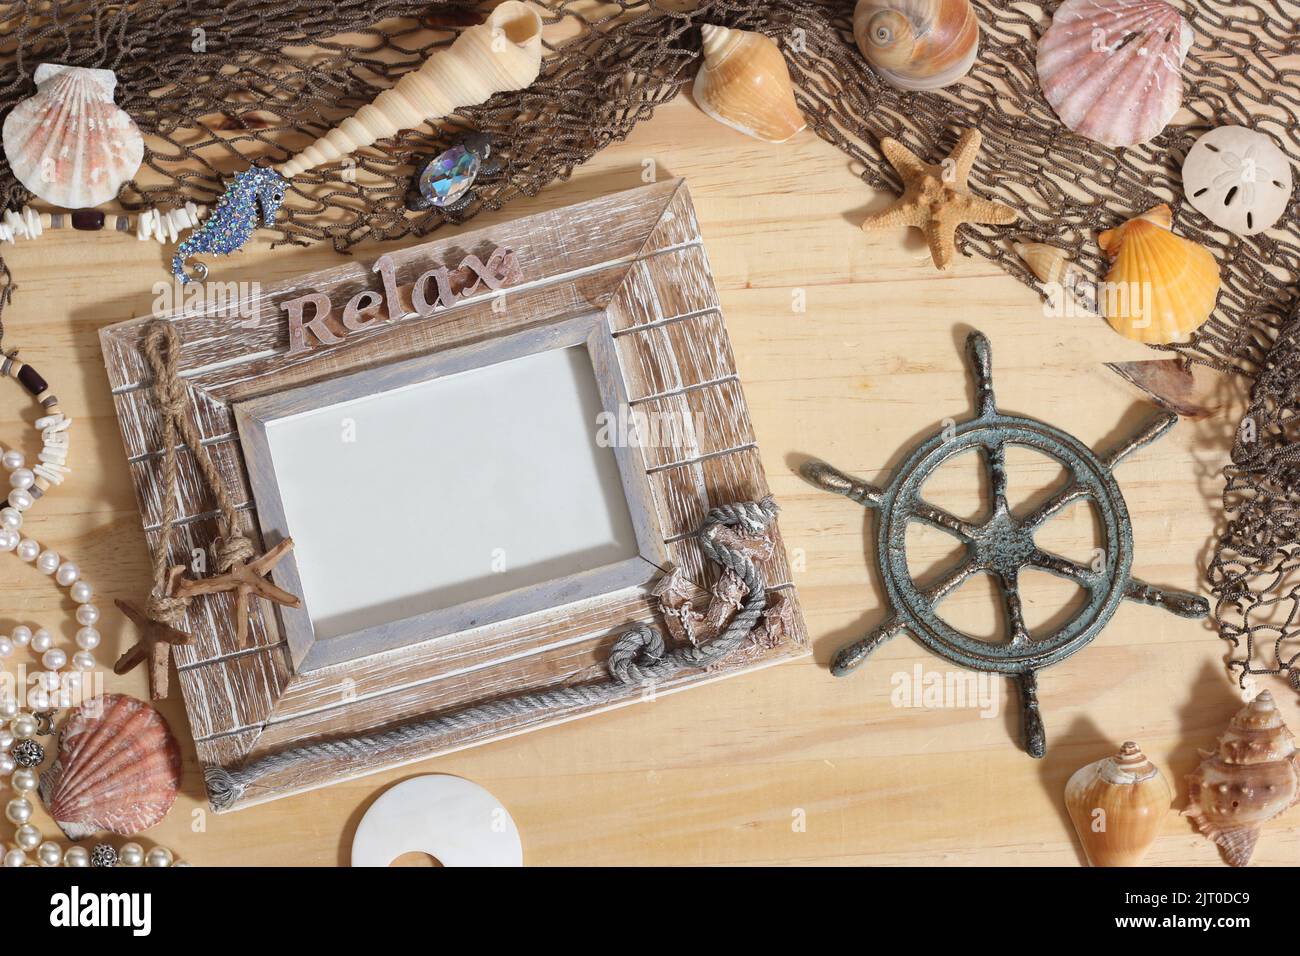 Empty Frame on Wood Background With Sea Shells and Fishing Net. Nautical and Coastal Theme Stock Photo